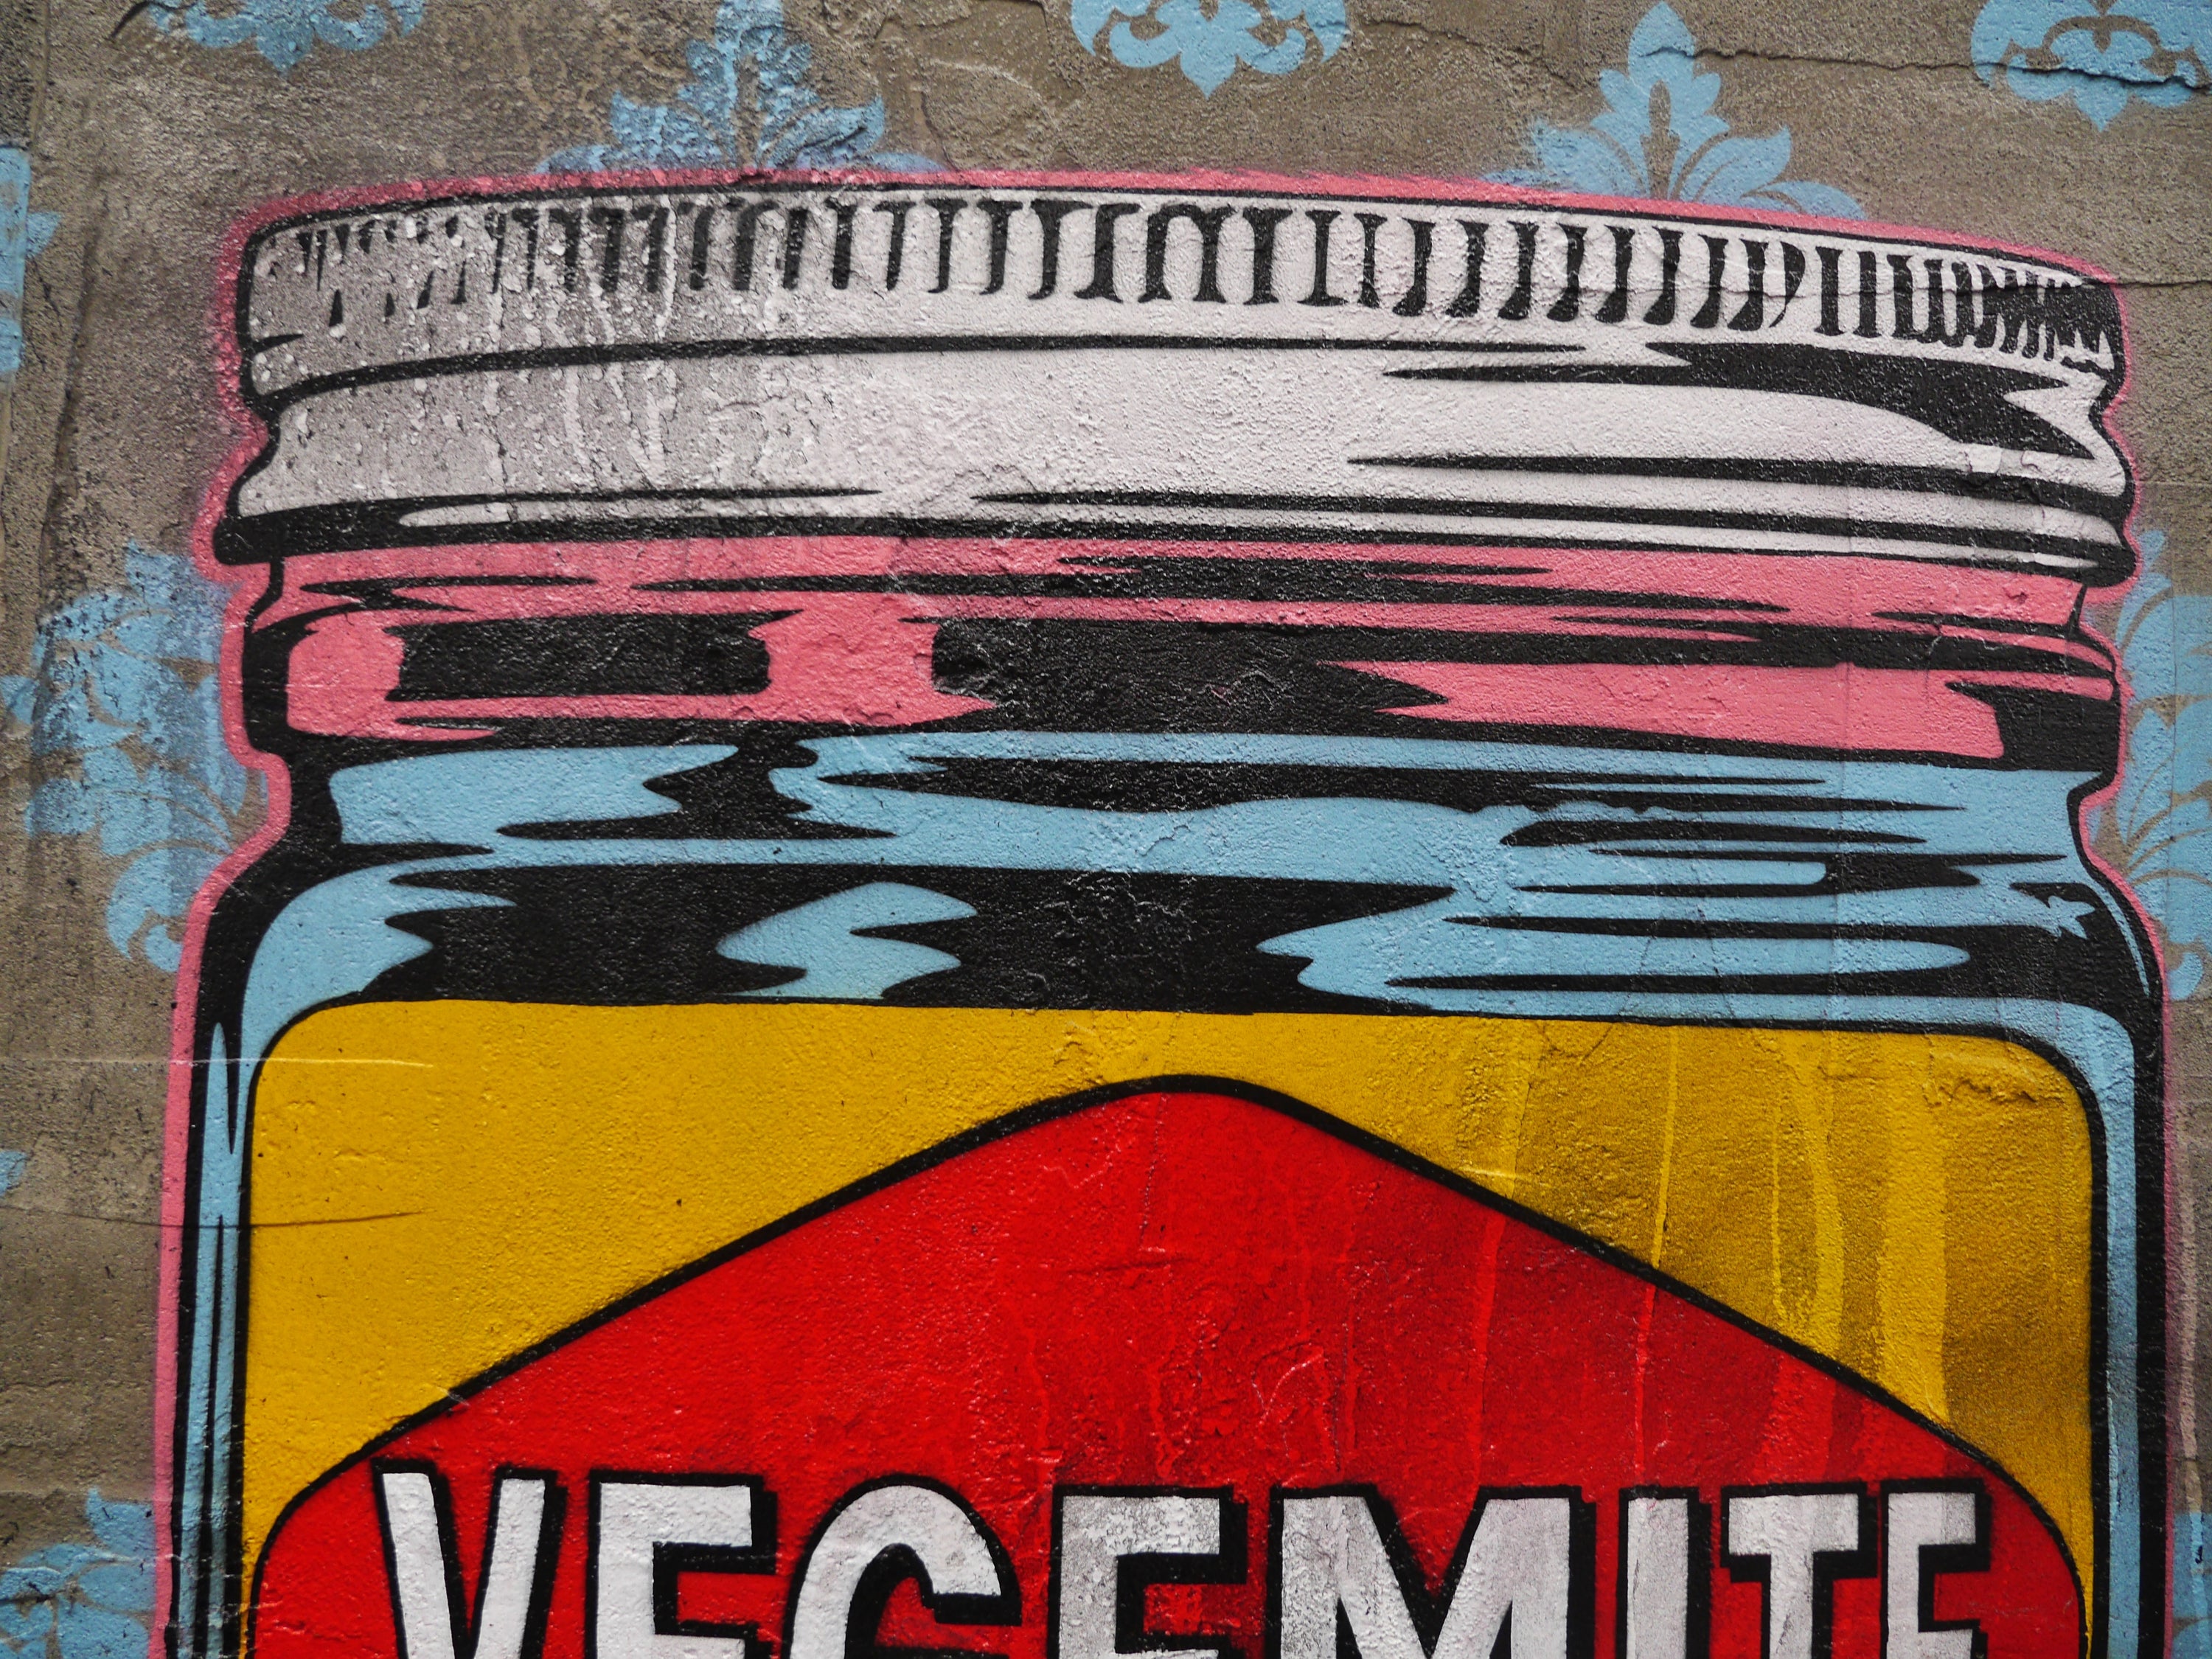 Vegemite Extract 100cm x 100cm Vegemite Textured Concrete Urban Pop Art Painting (SOLD)